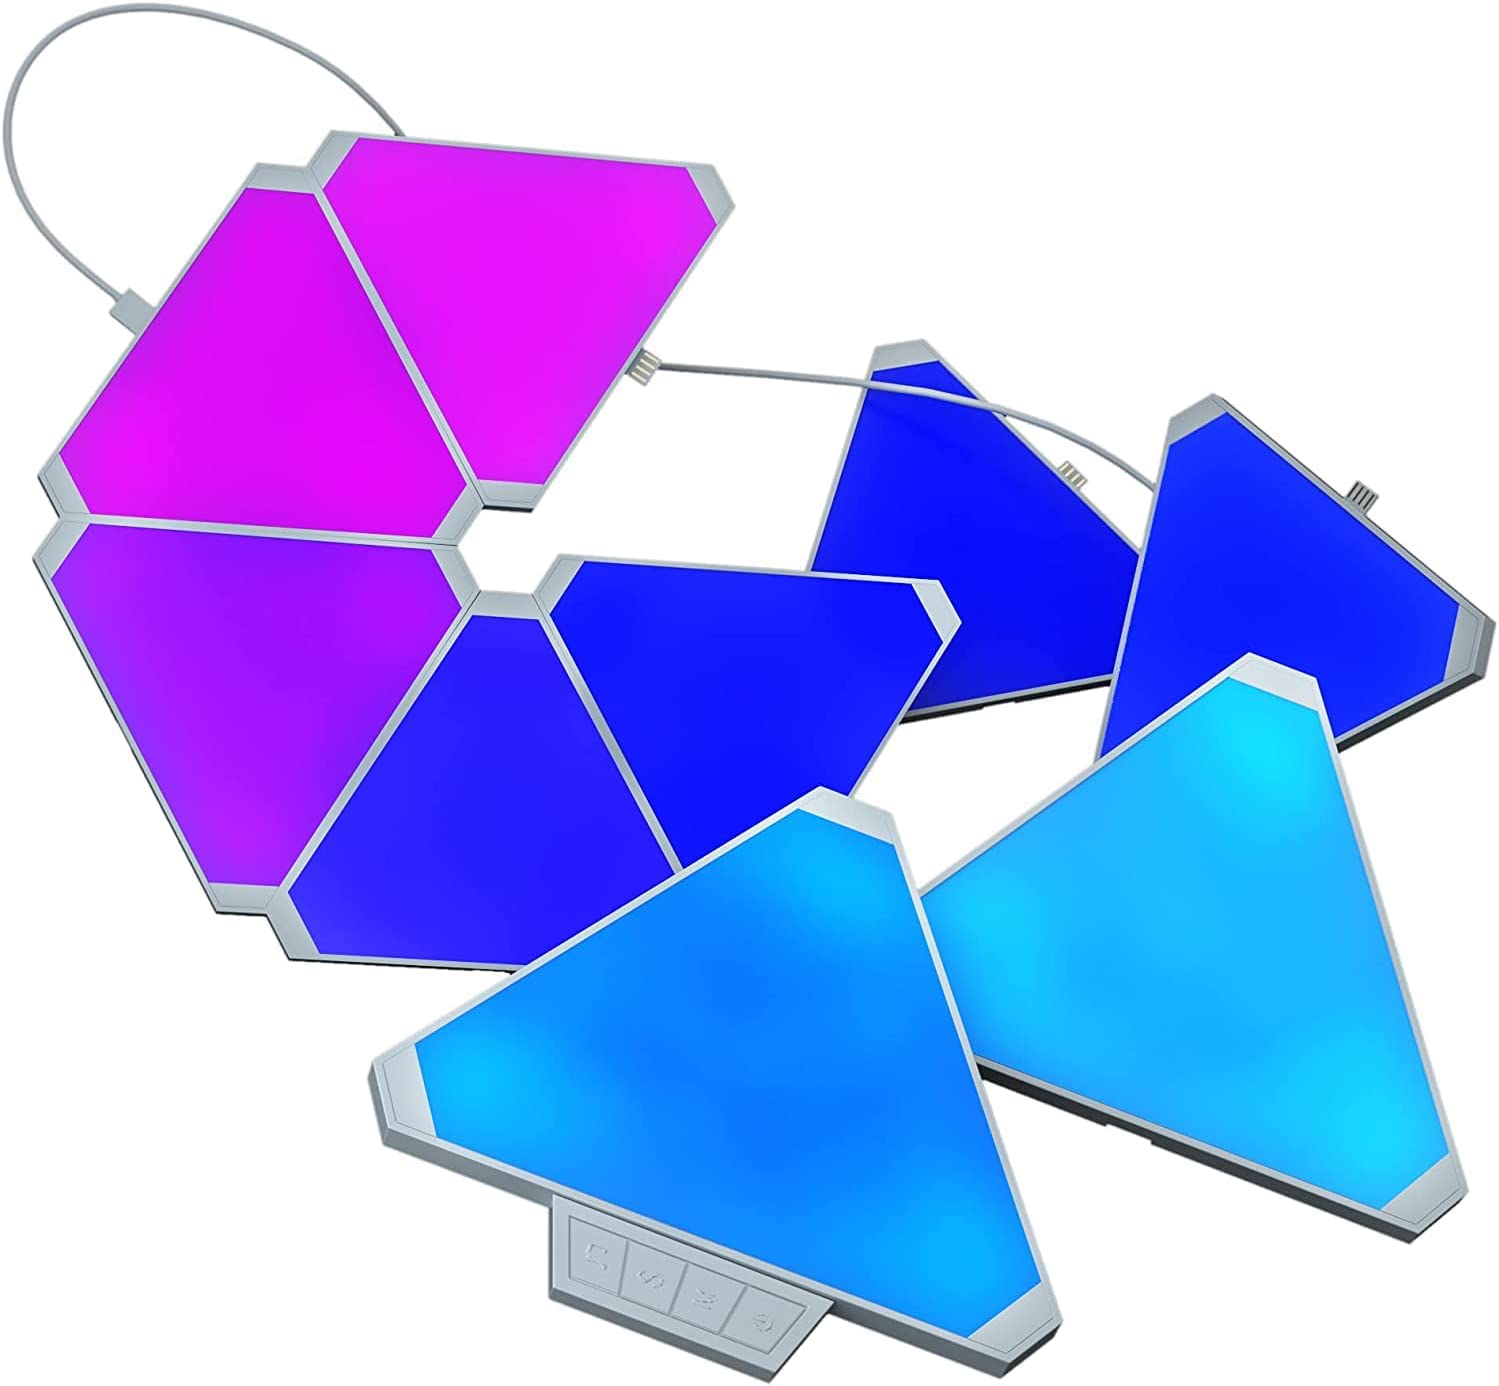 Triangle RGB LED Wall Light Panels HomeMate